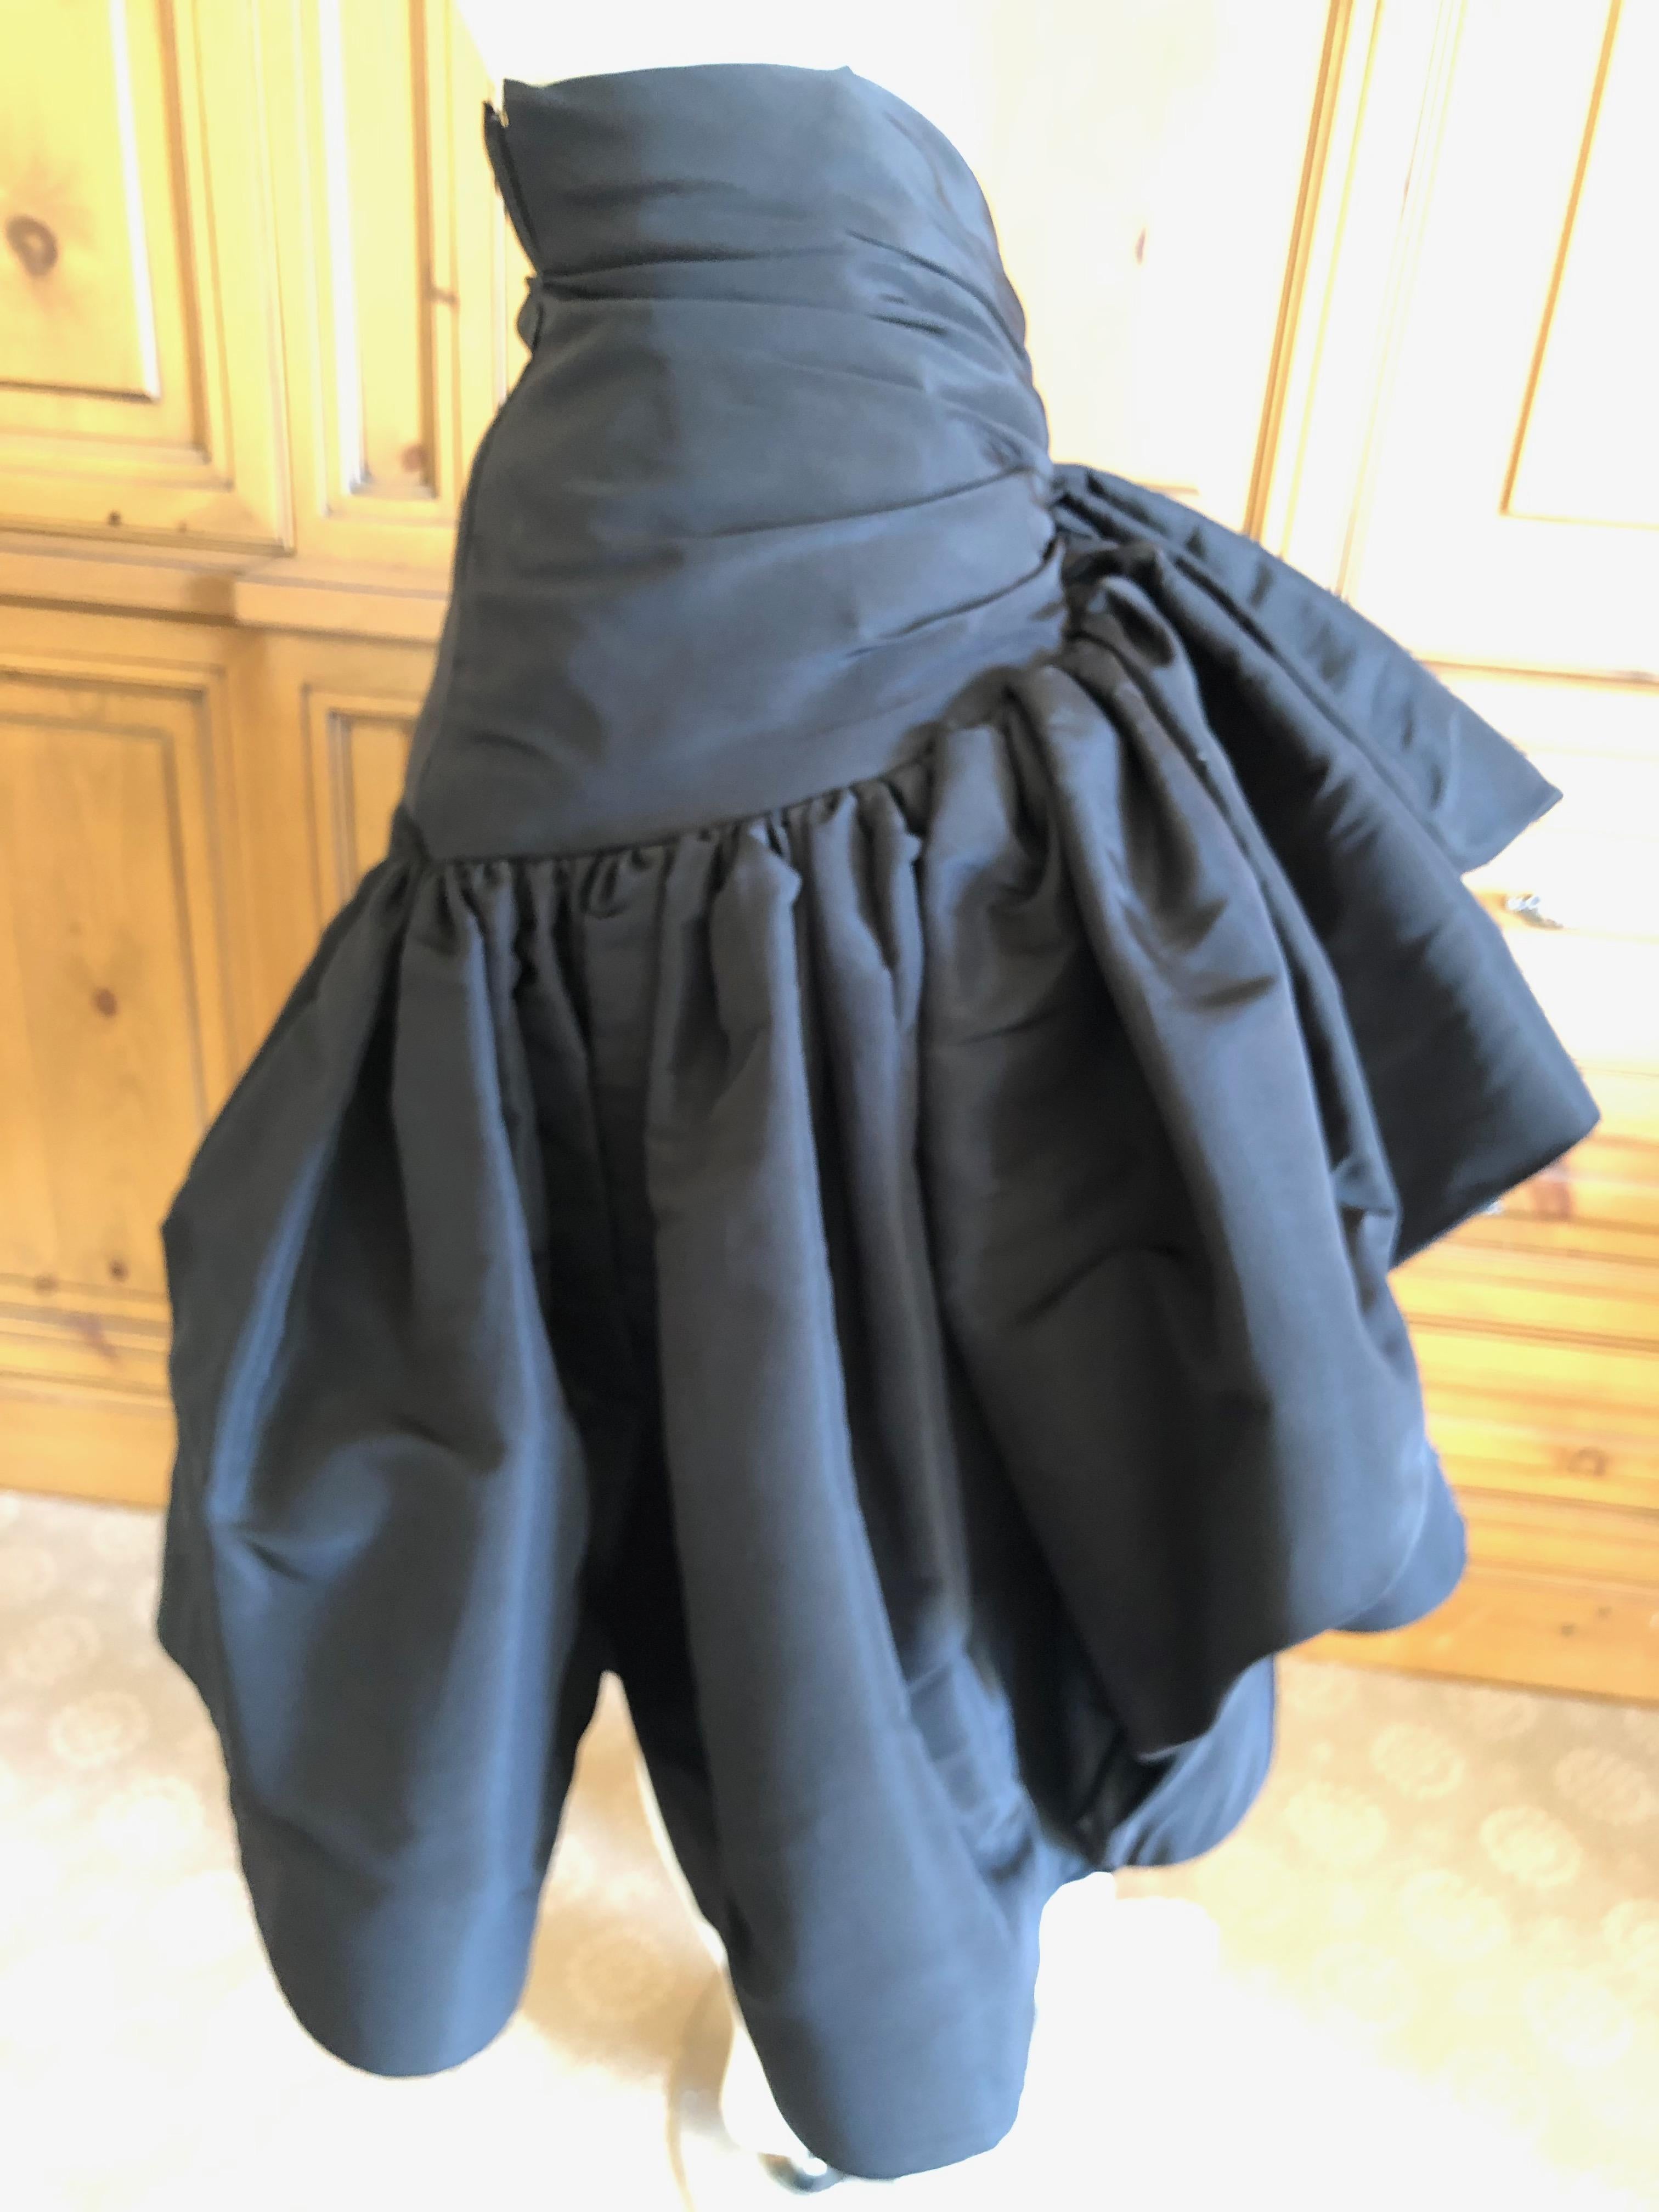 Oscar de la Renta Dramatic Vintage Black Silk Taffeta Ball Skirt XS (4) For Sale 1